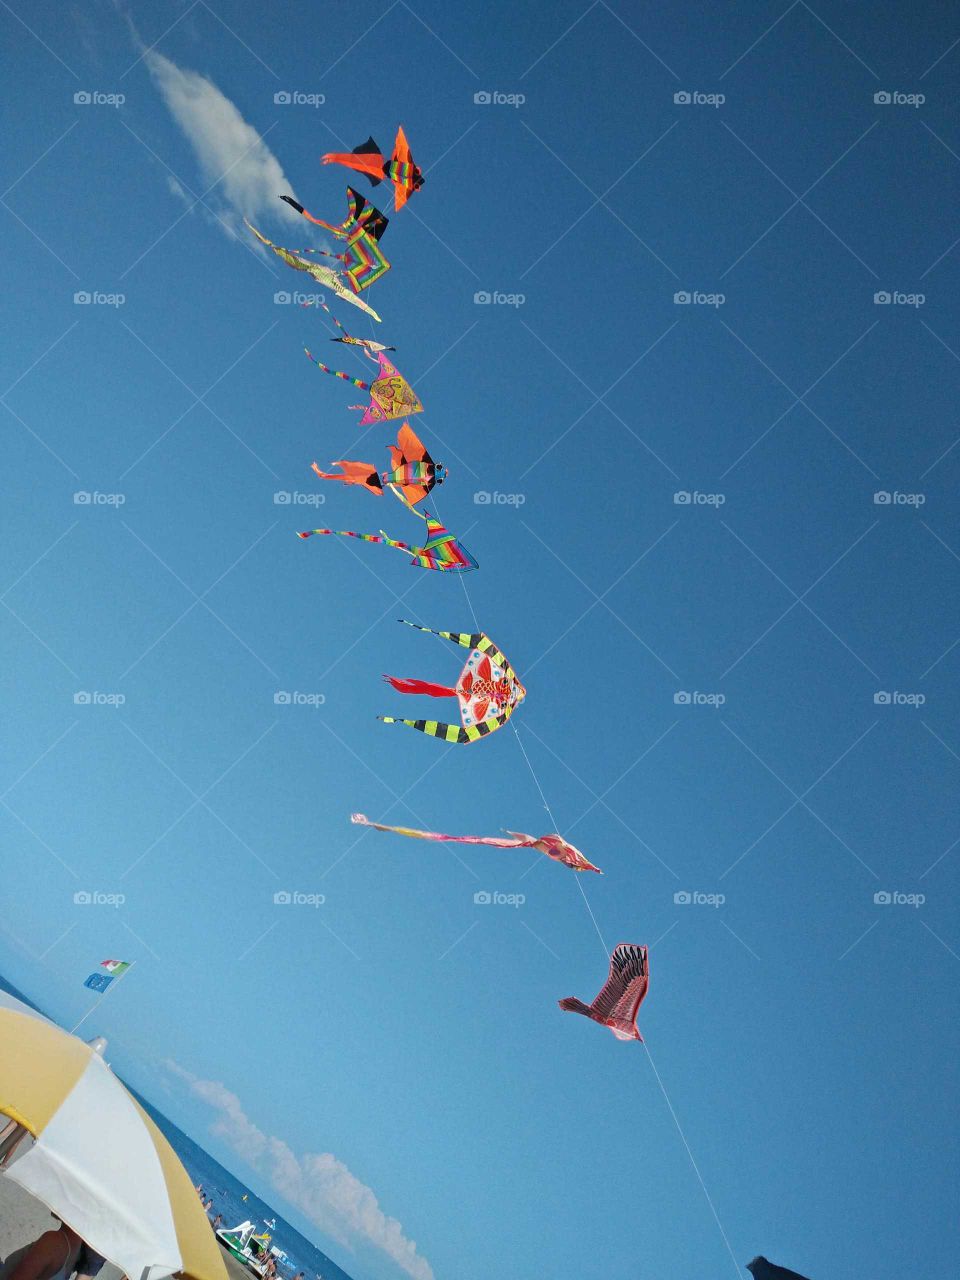 Kites flying in the blue sky